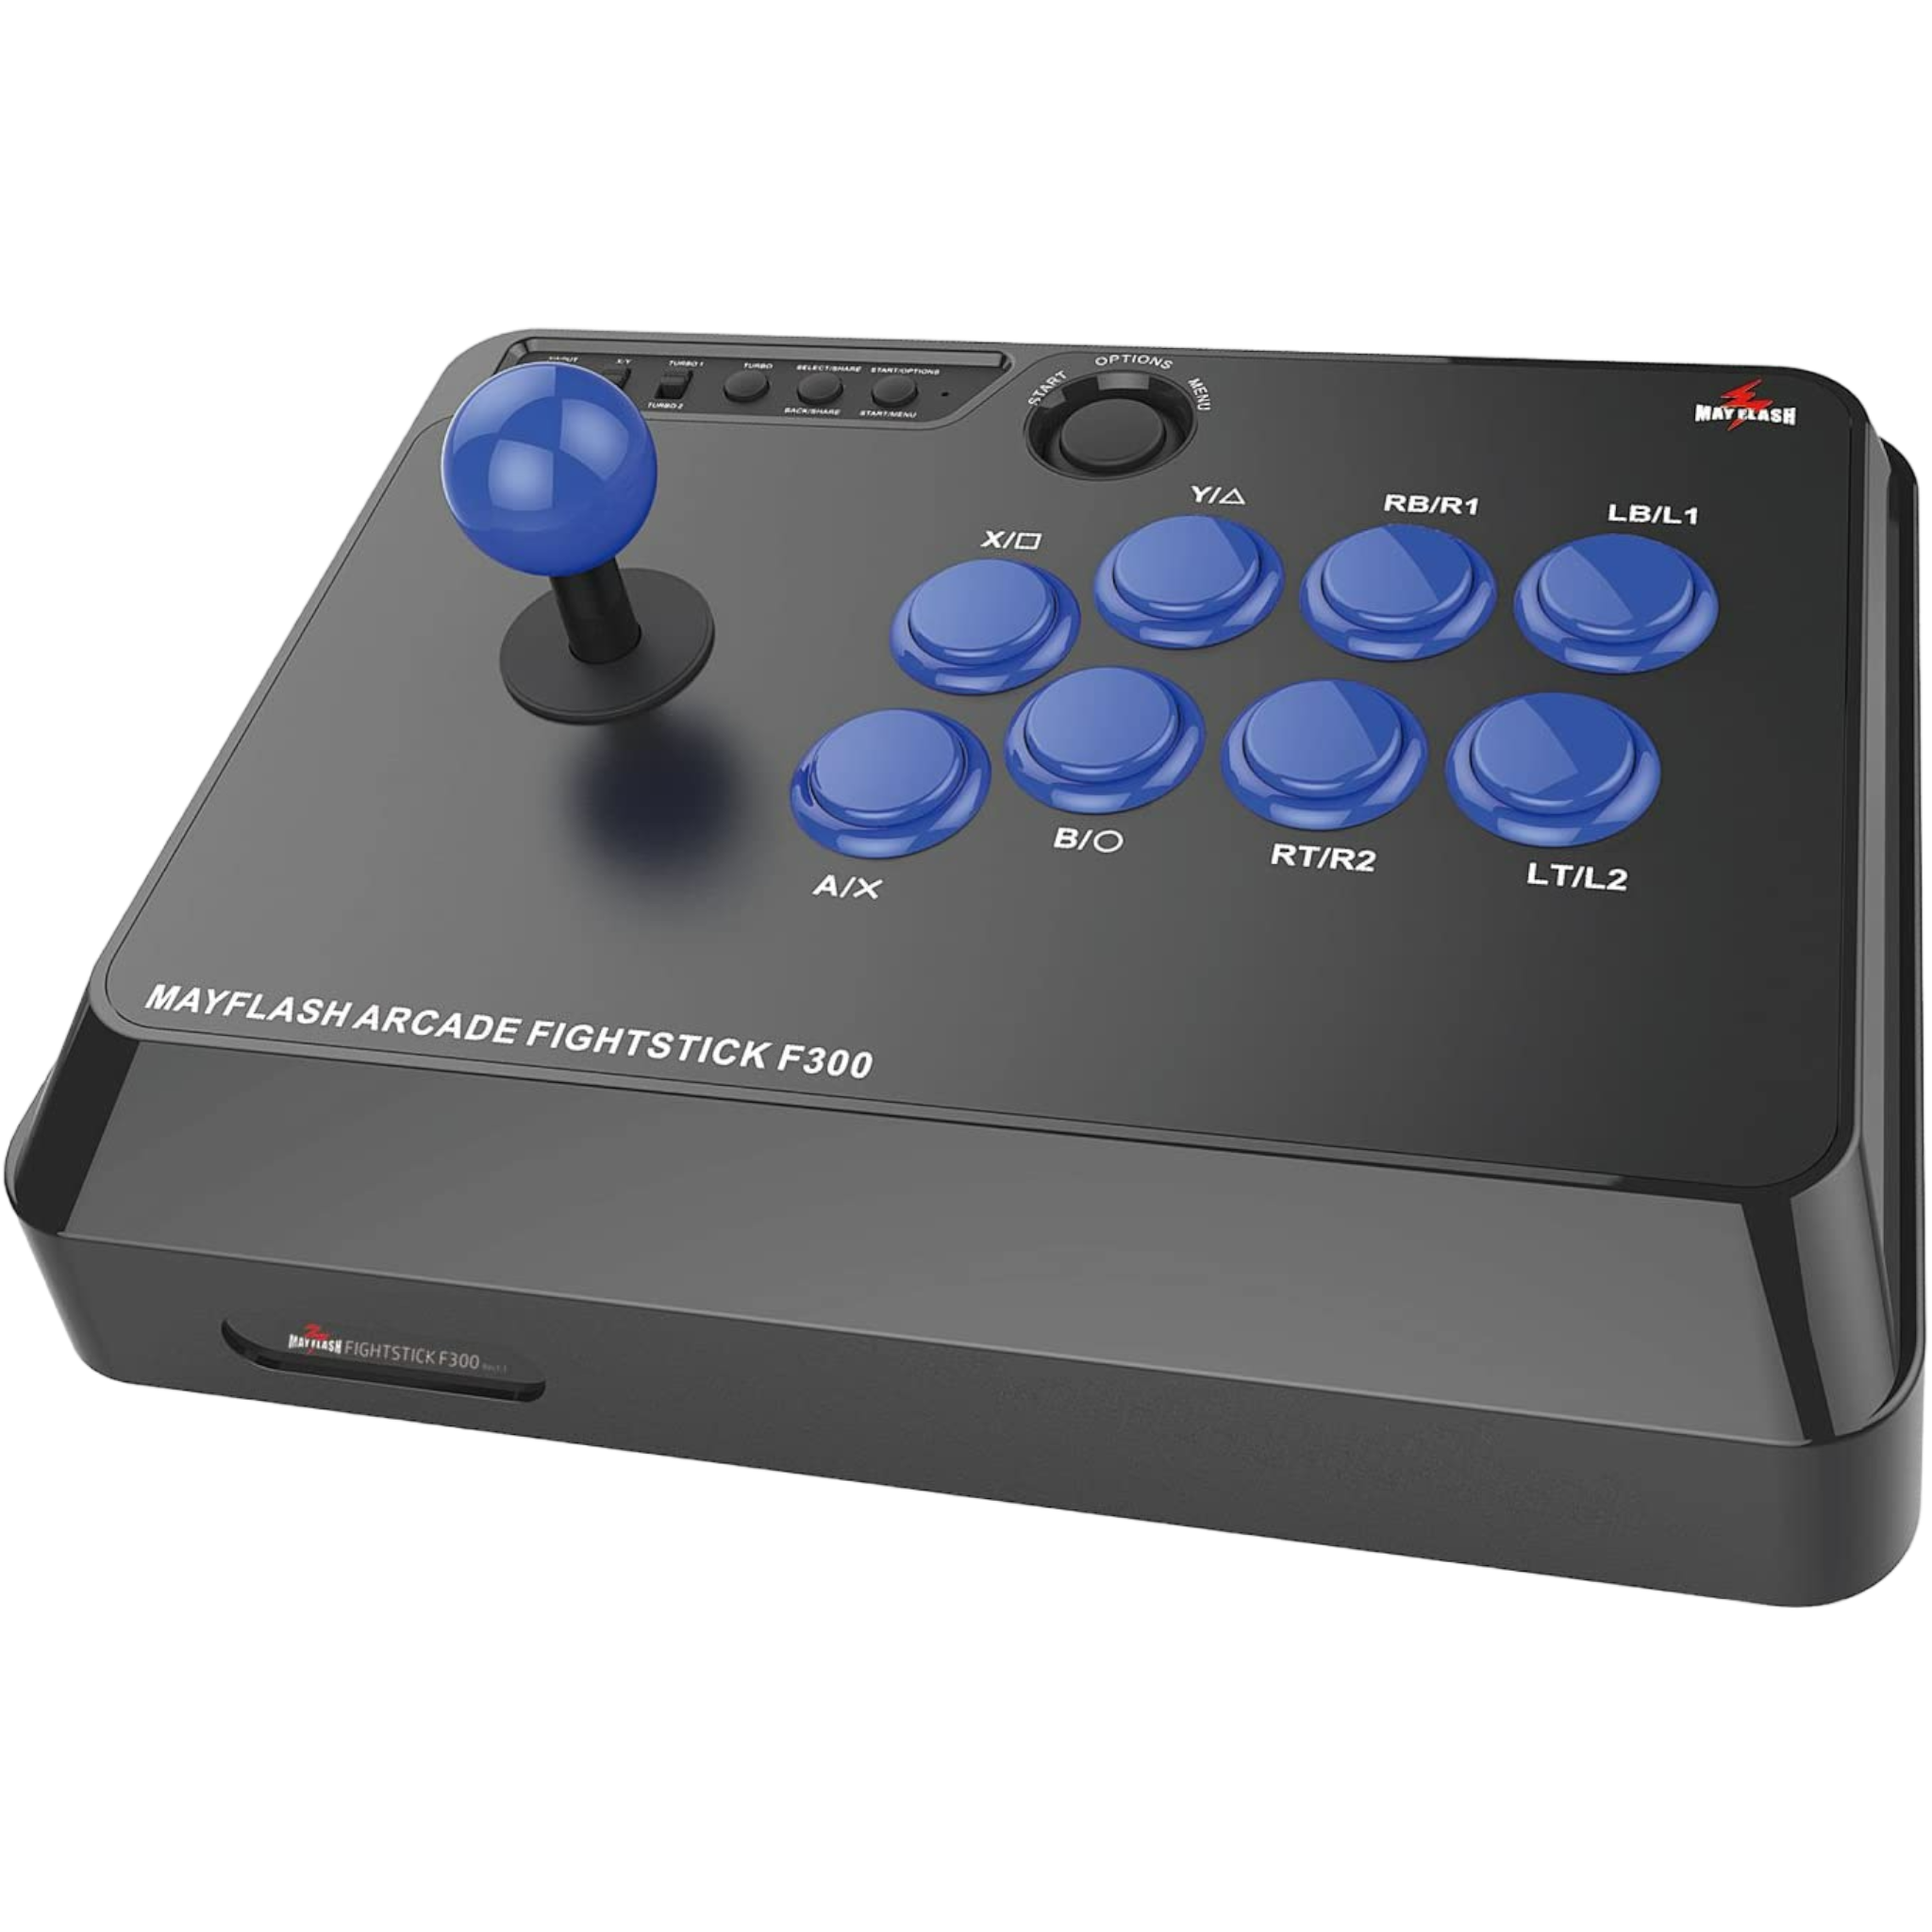 F300 Fight Stick Joystick for PS4 PS3 XBOX XBOX PC Switch NeoGeo mini freeshipping - Pro-Distributing